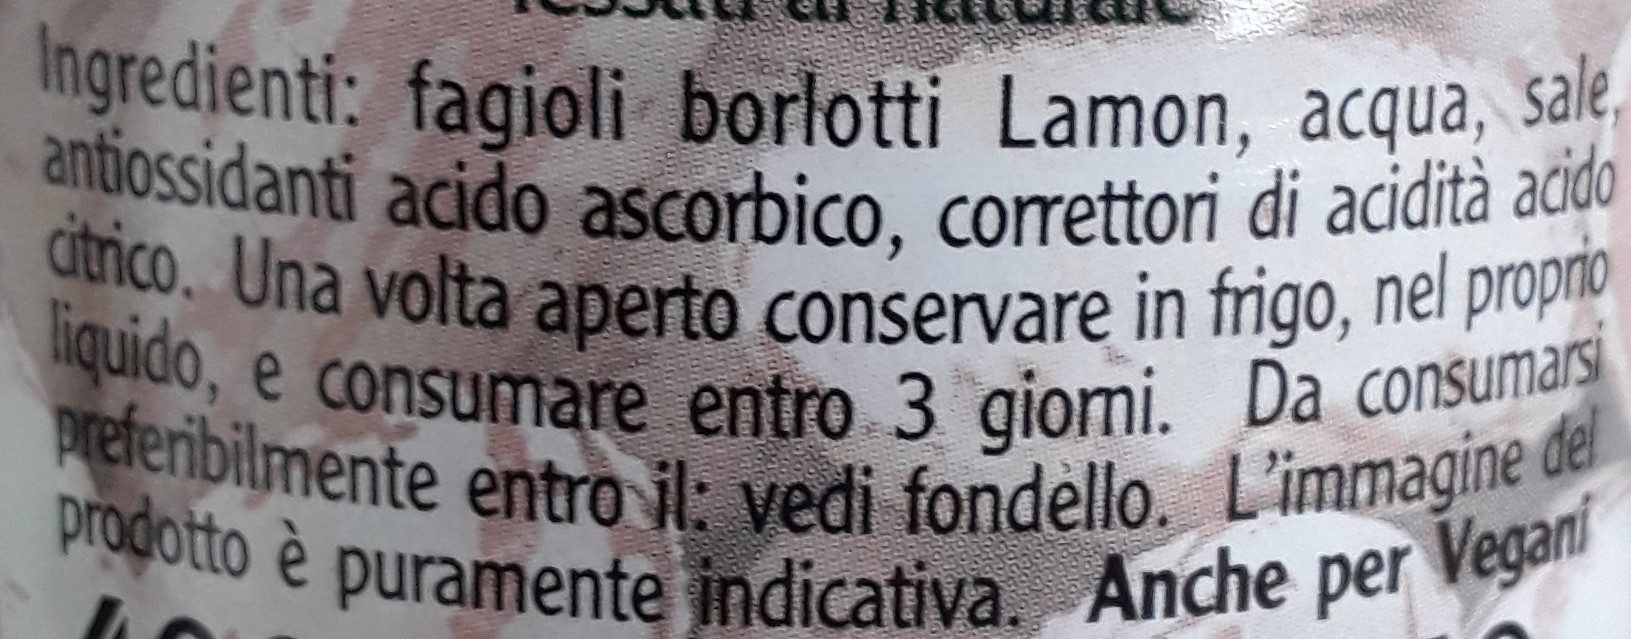 Fagioli Borlotti Lamon - Ingredienti